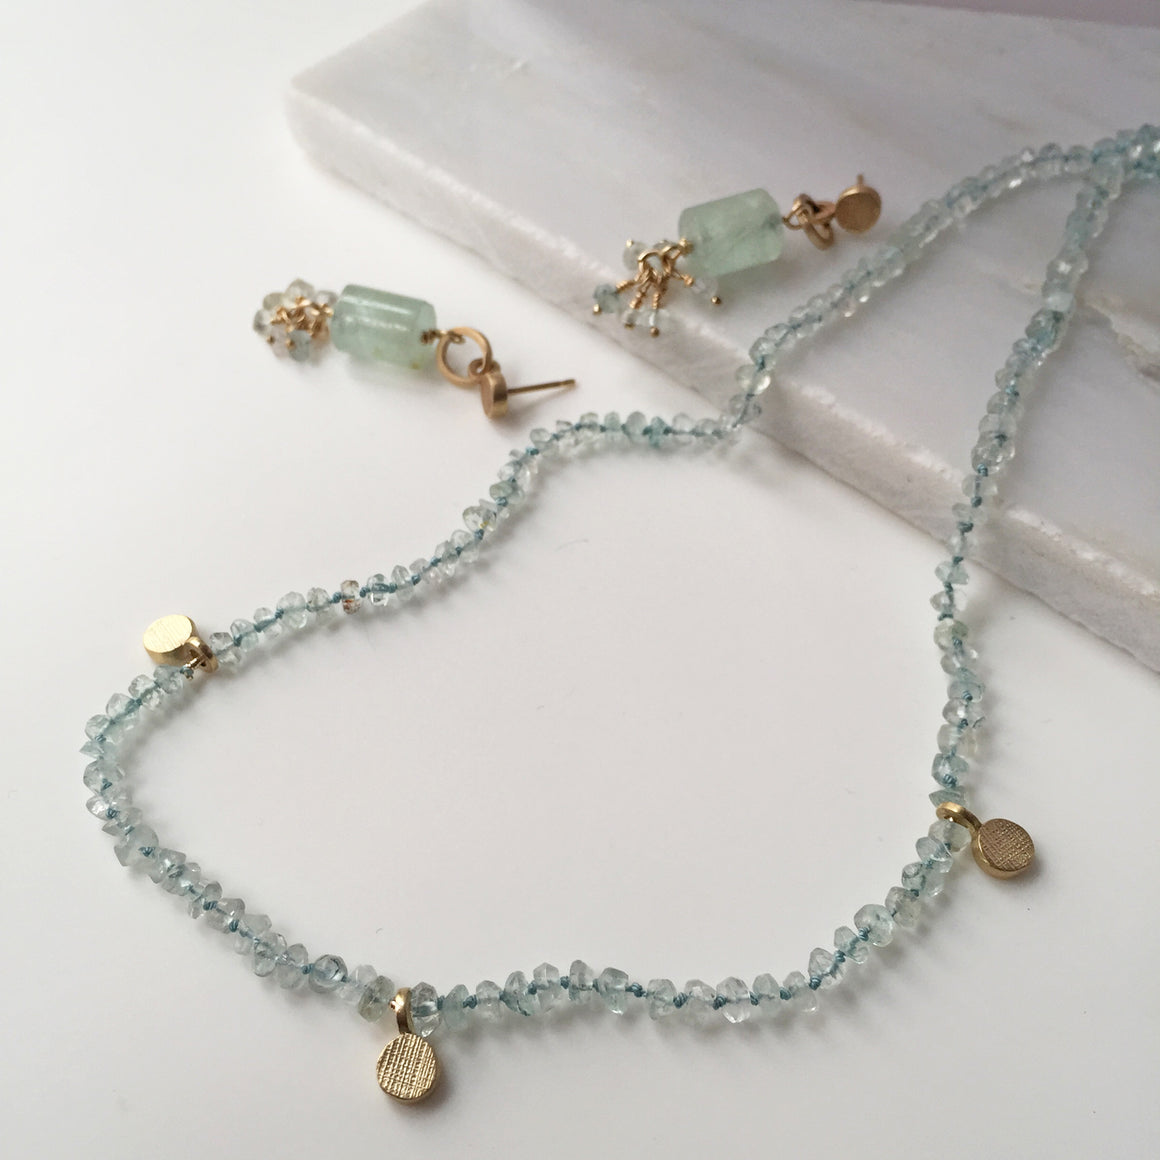 Aquamarine and Gold Necklace